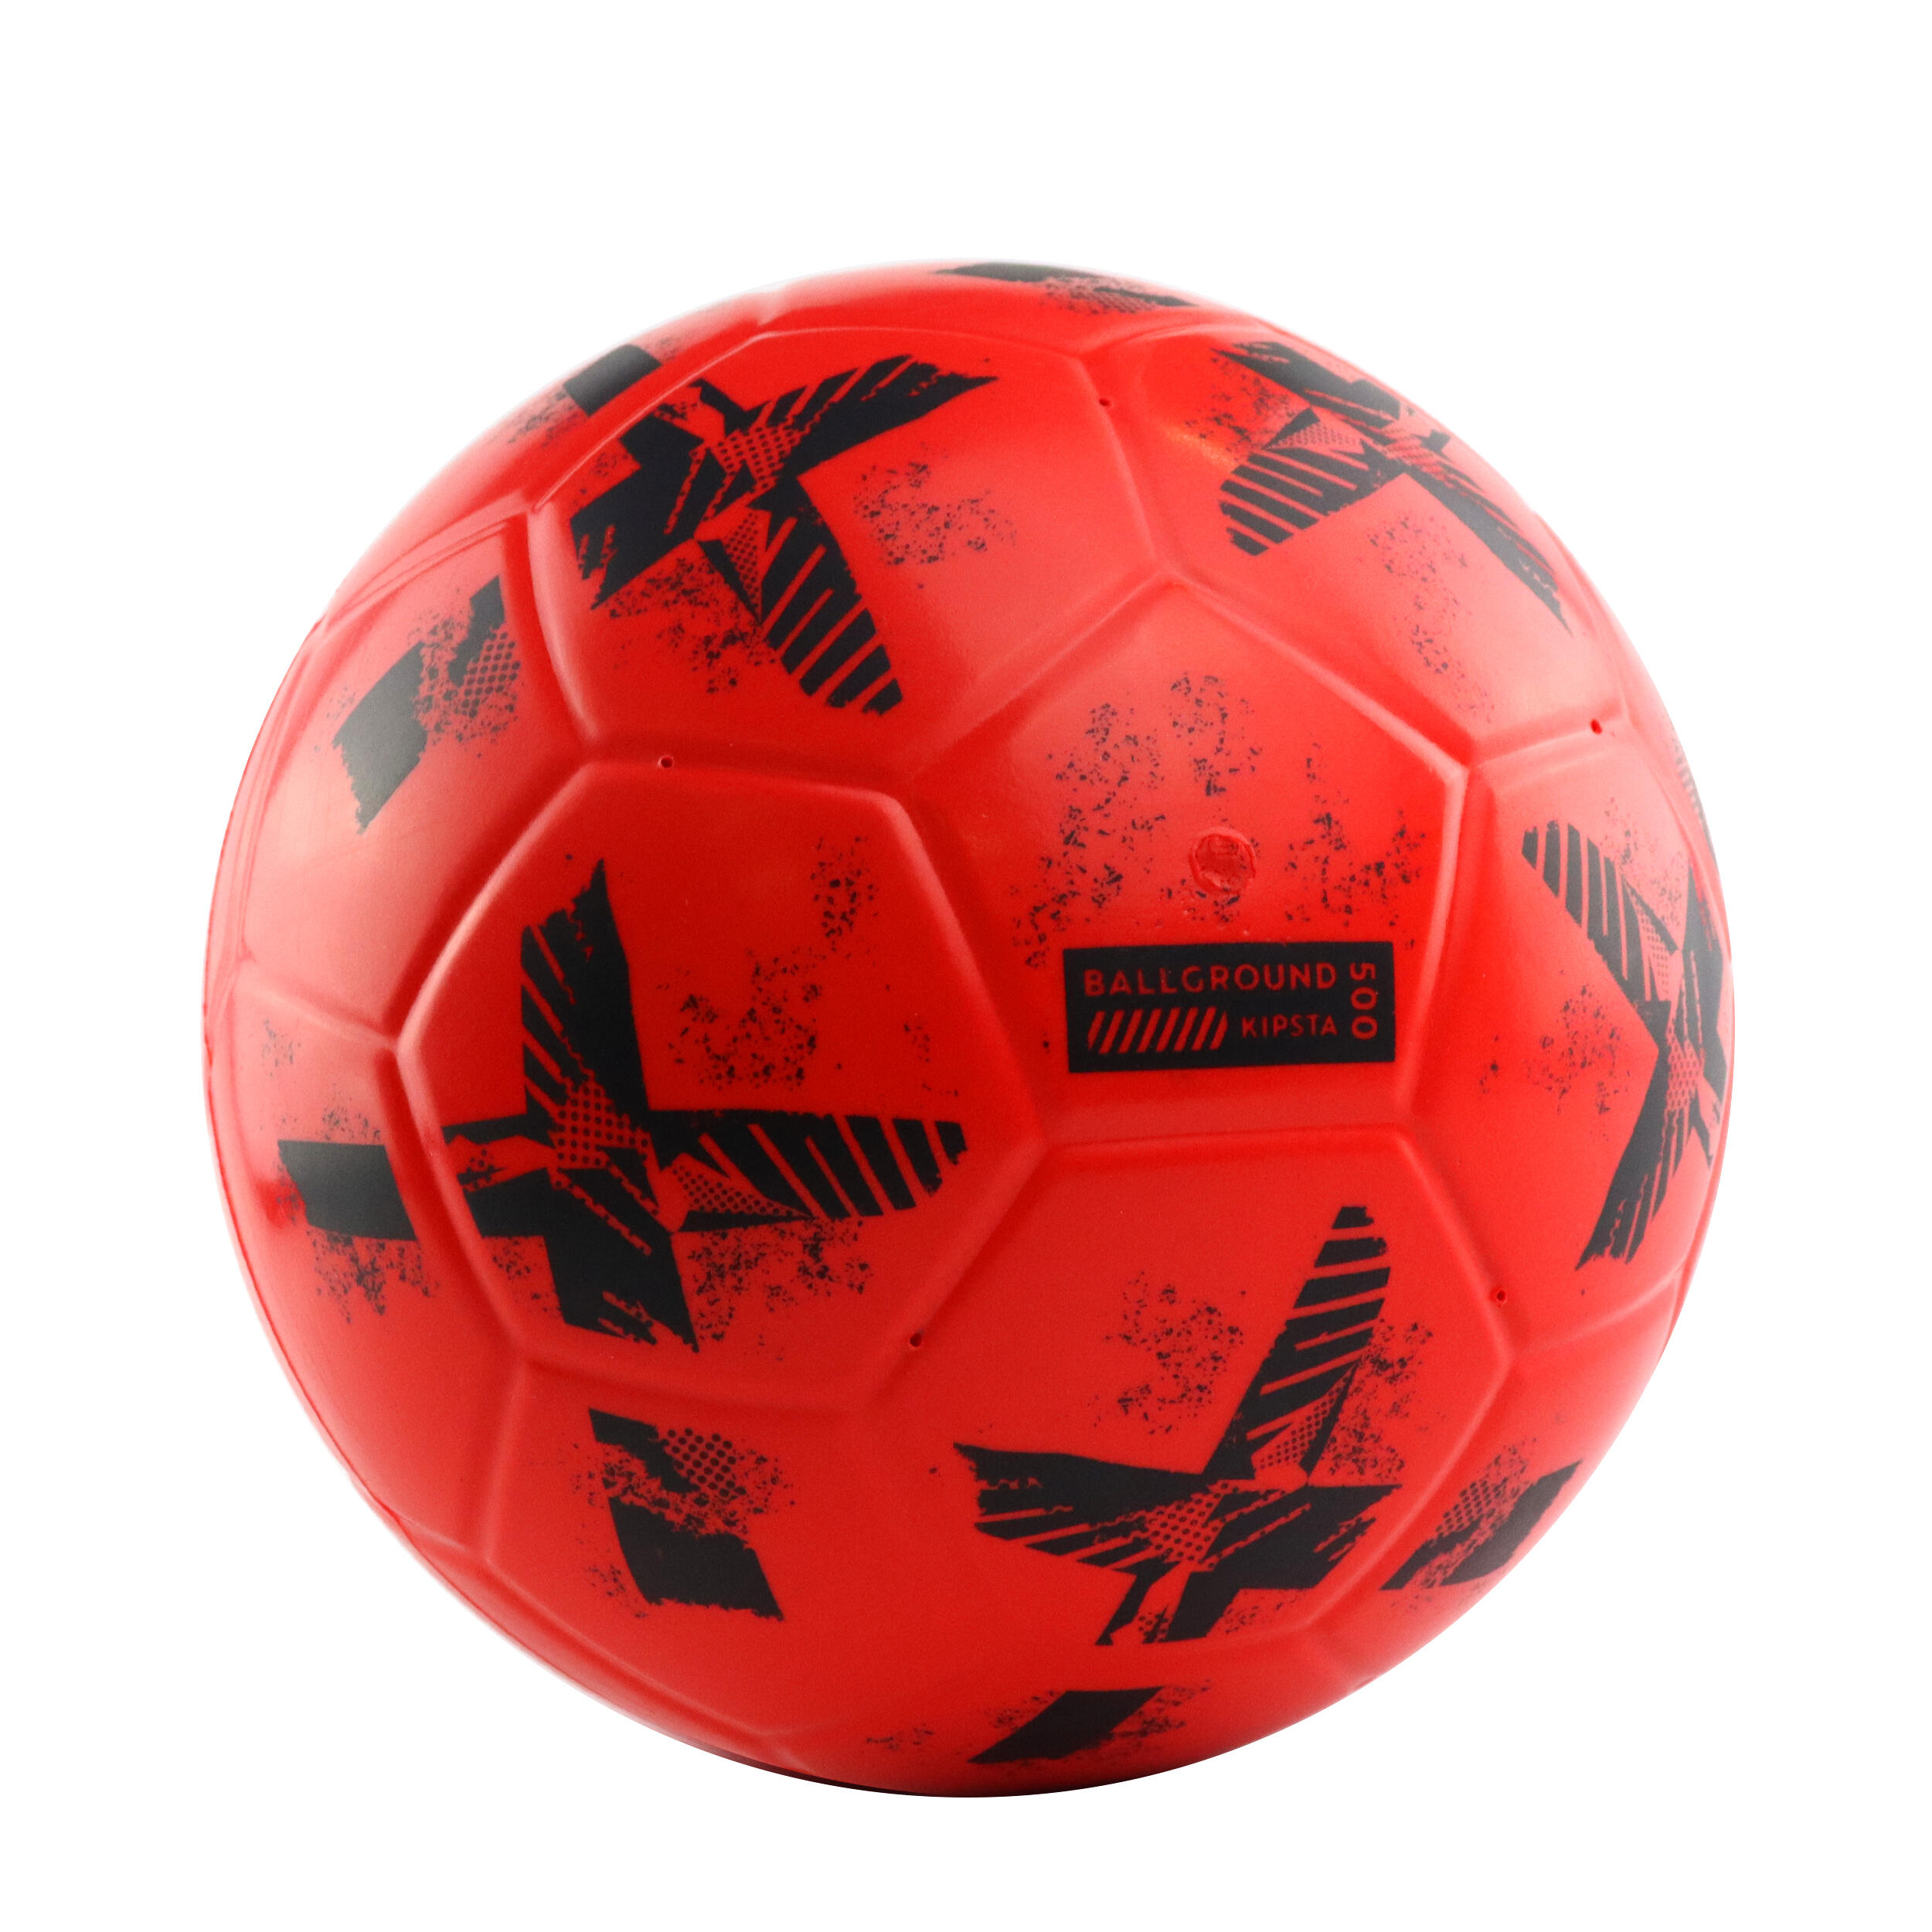 KIPSTA Foam Football S4 Ballground 500 - Red/Black